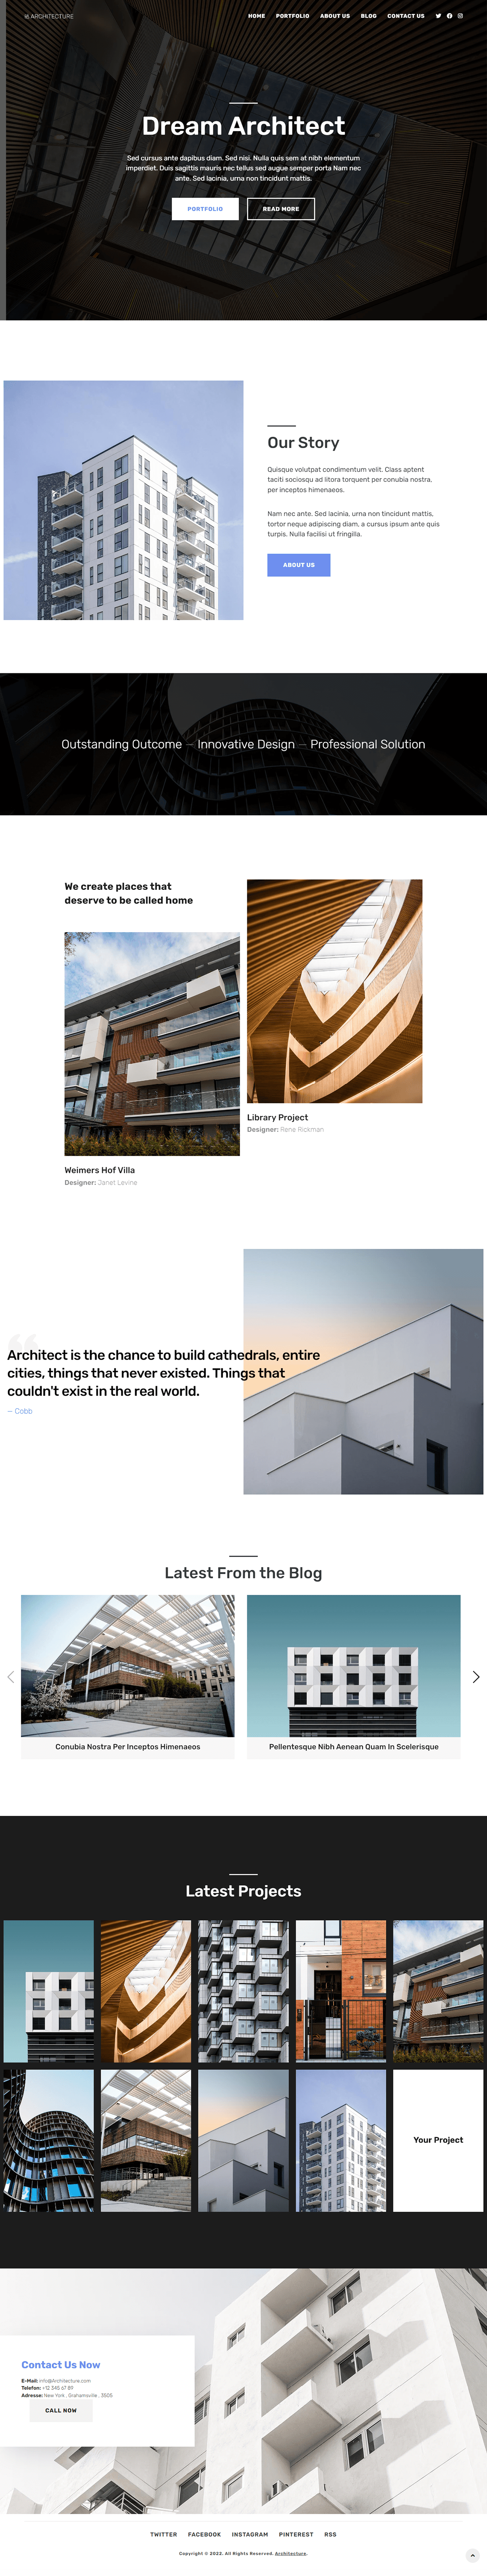 Architecture Website